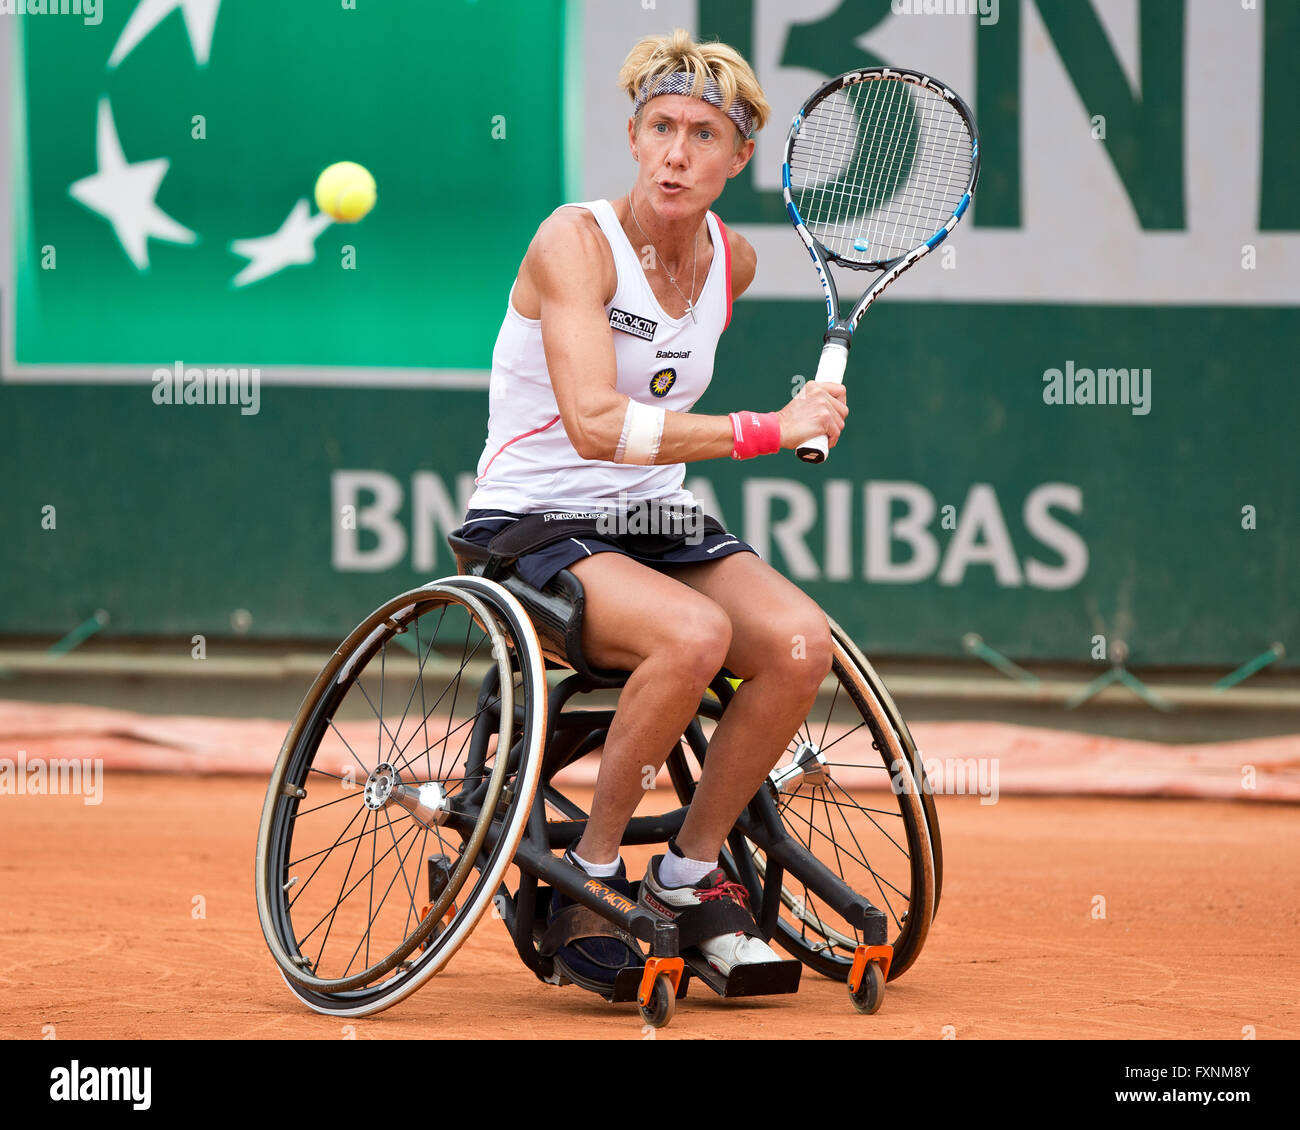 Sabine Ellerbrock, GER, Open de France 2015, Grand Chelem Tennis Turnier, Roland Garros, Paris, Frankreich Banque D'Images